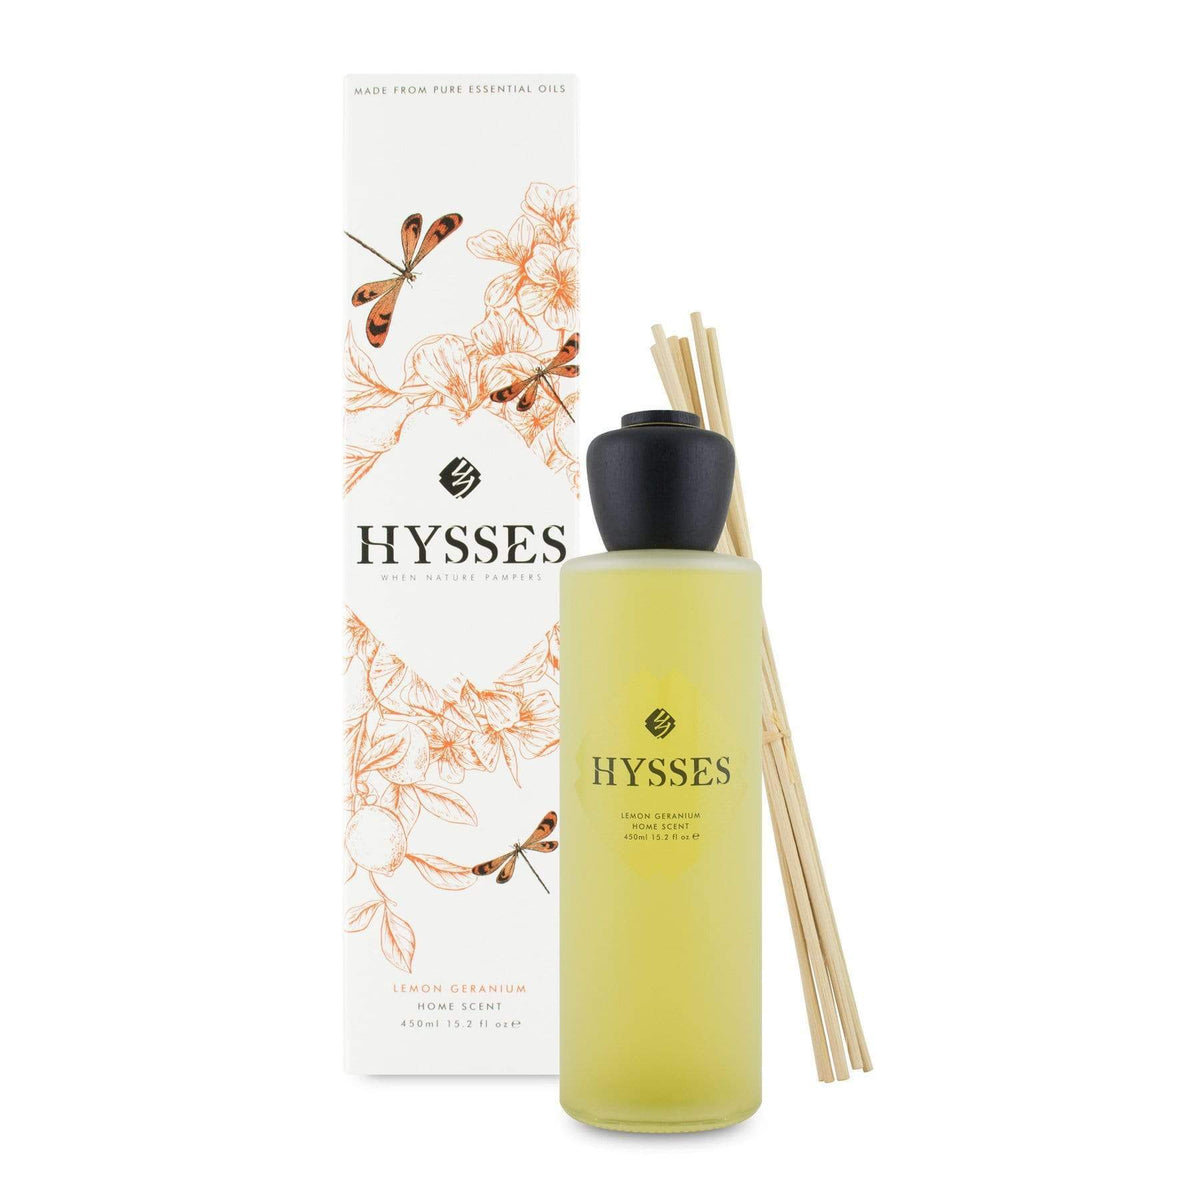 Hysses Home Scents 450ml Home Scent Reed Diffuser Lemon Geranium